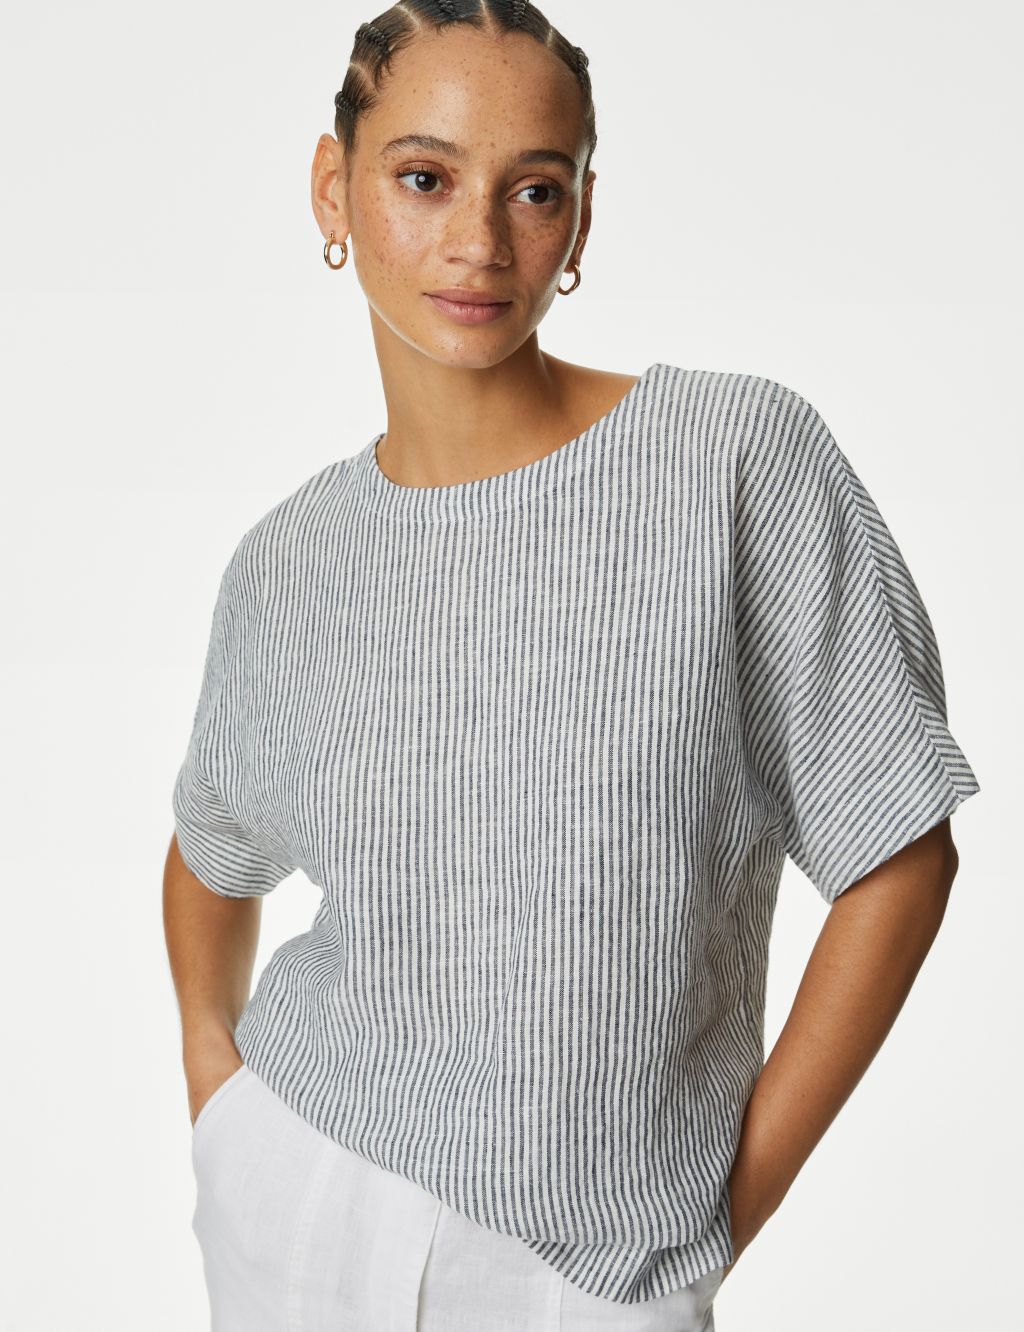 Women's Short Sleeve Tops, Blouses, Tops & Shirts, Hobbs London